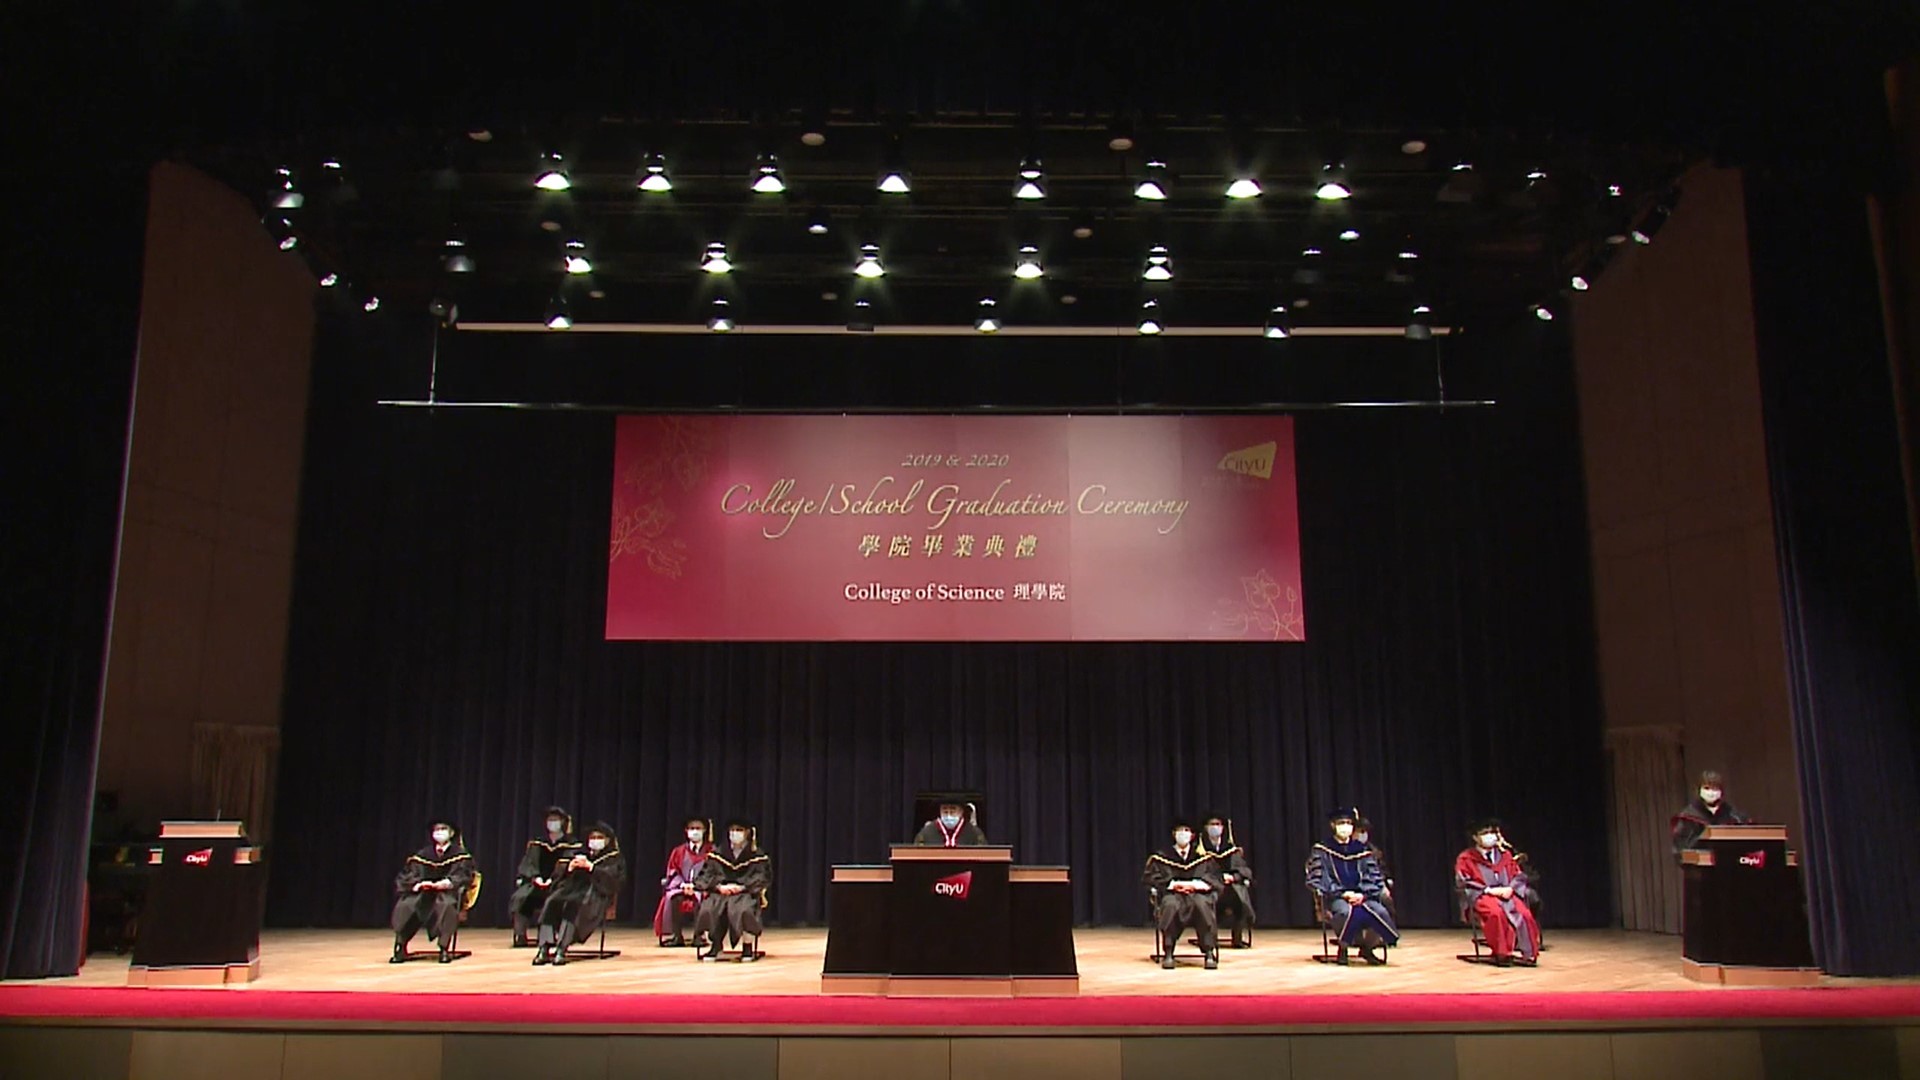 Virtual Graduation Ceremony 2019 & 2020